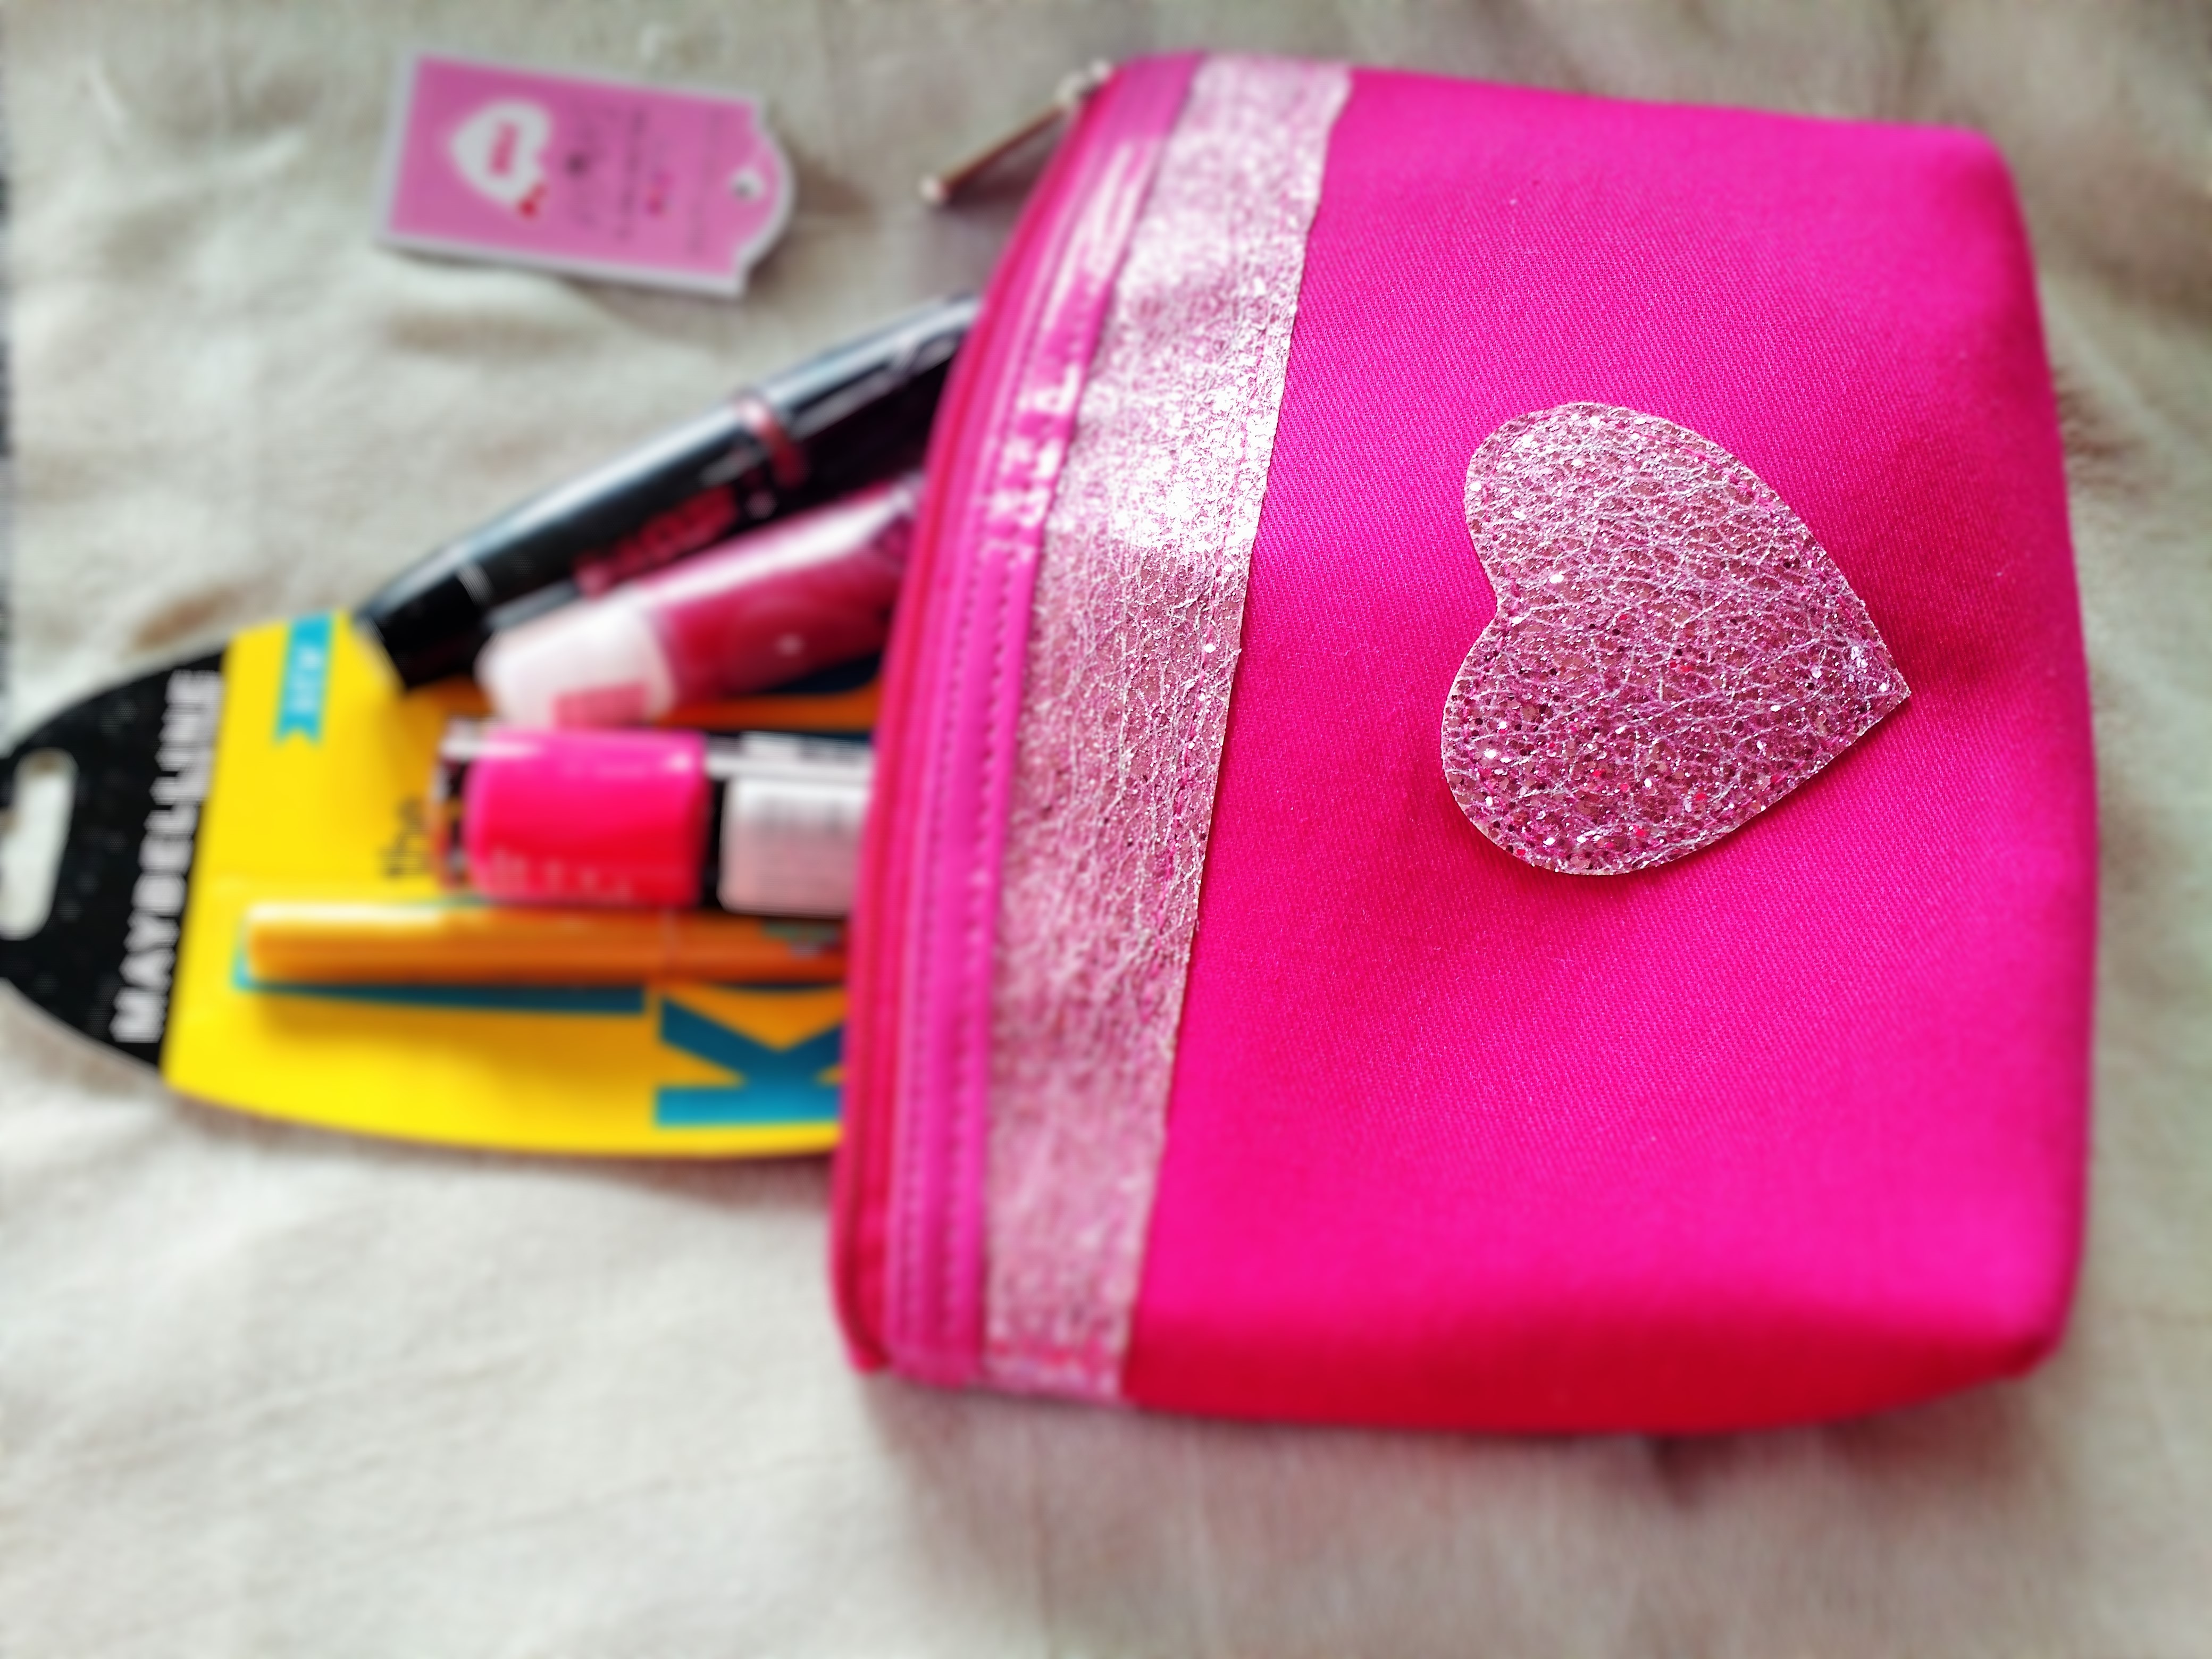 Maybelline Instaglam Valentine's Gift Kit